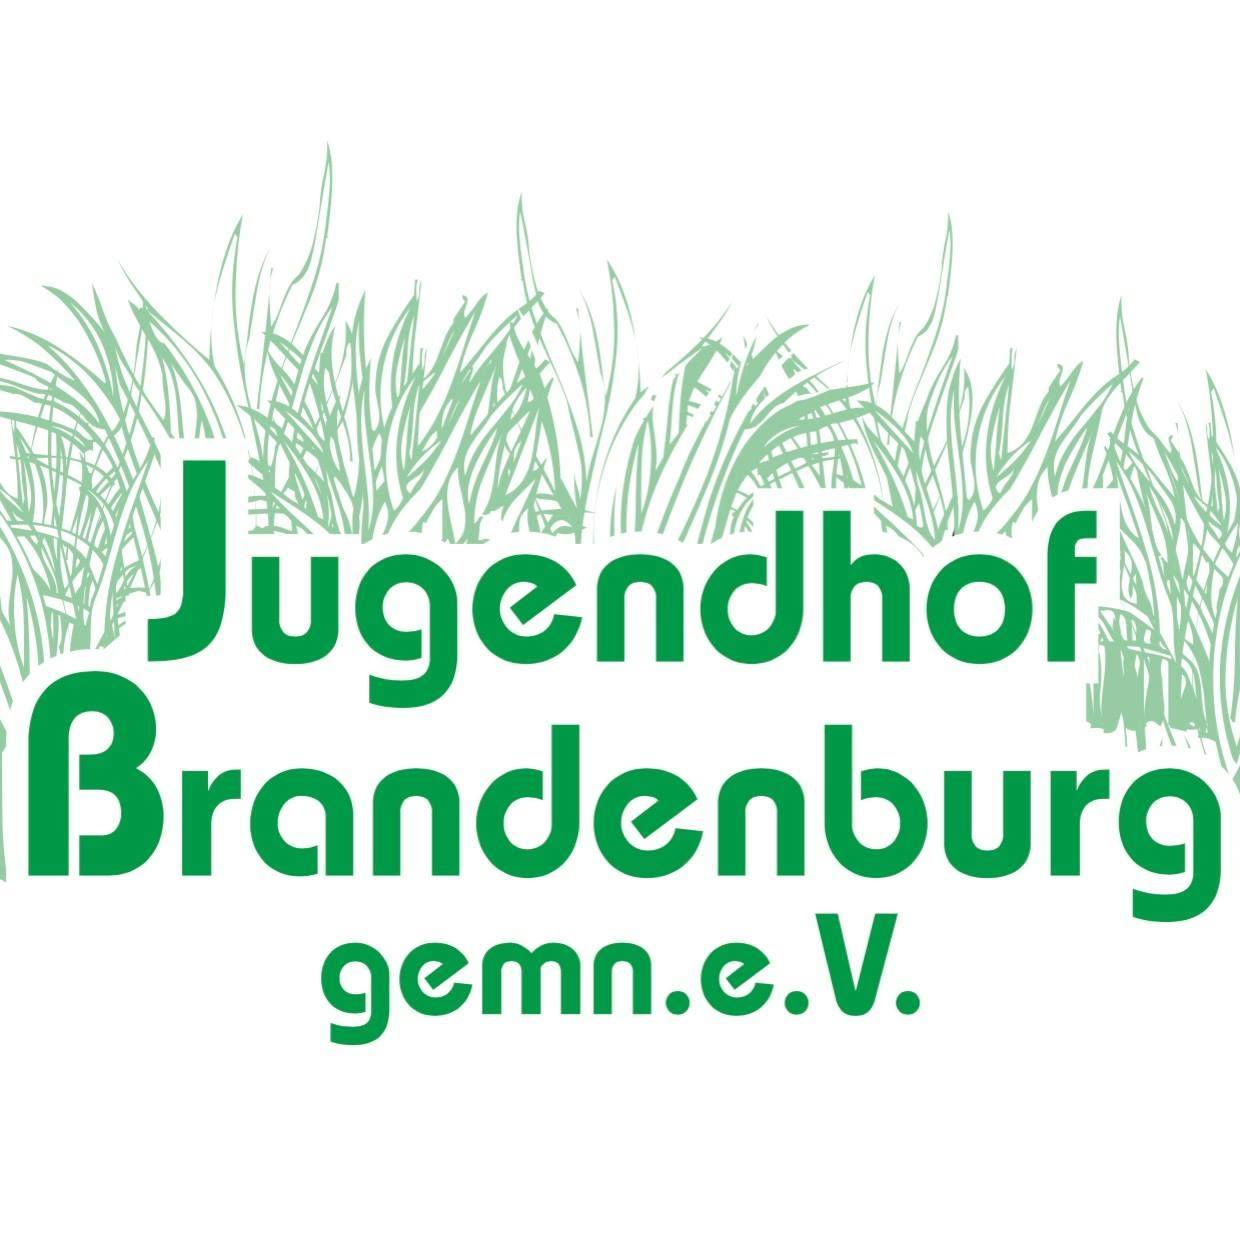 Jugendhof Brandenburg